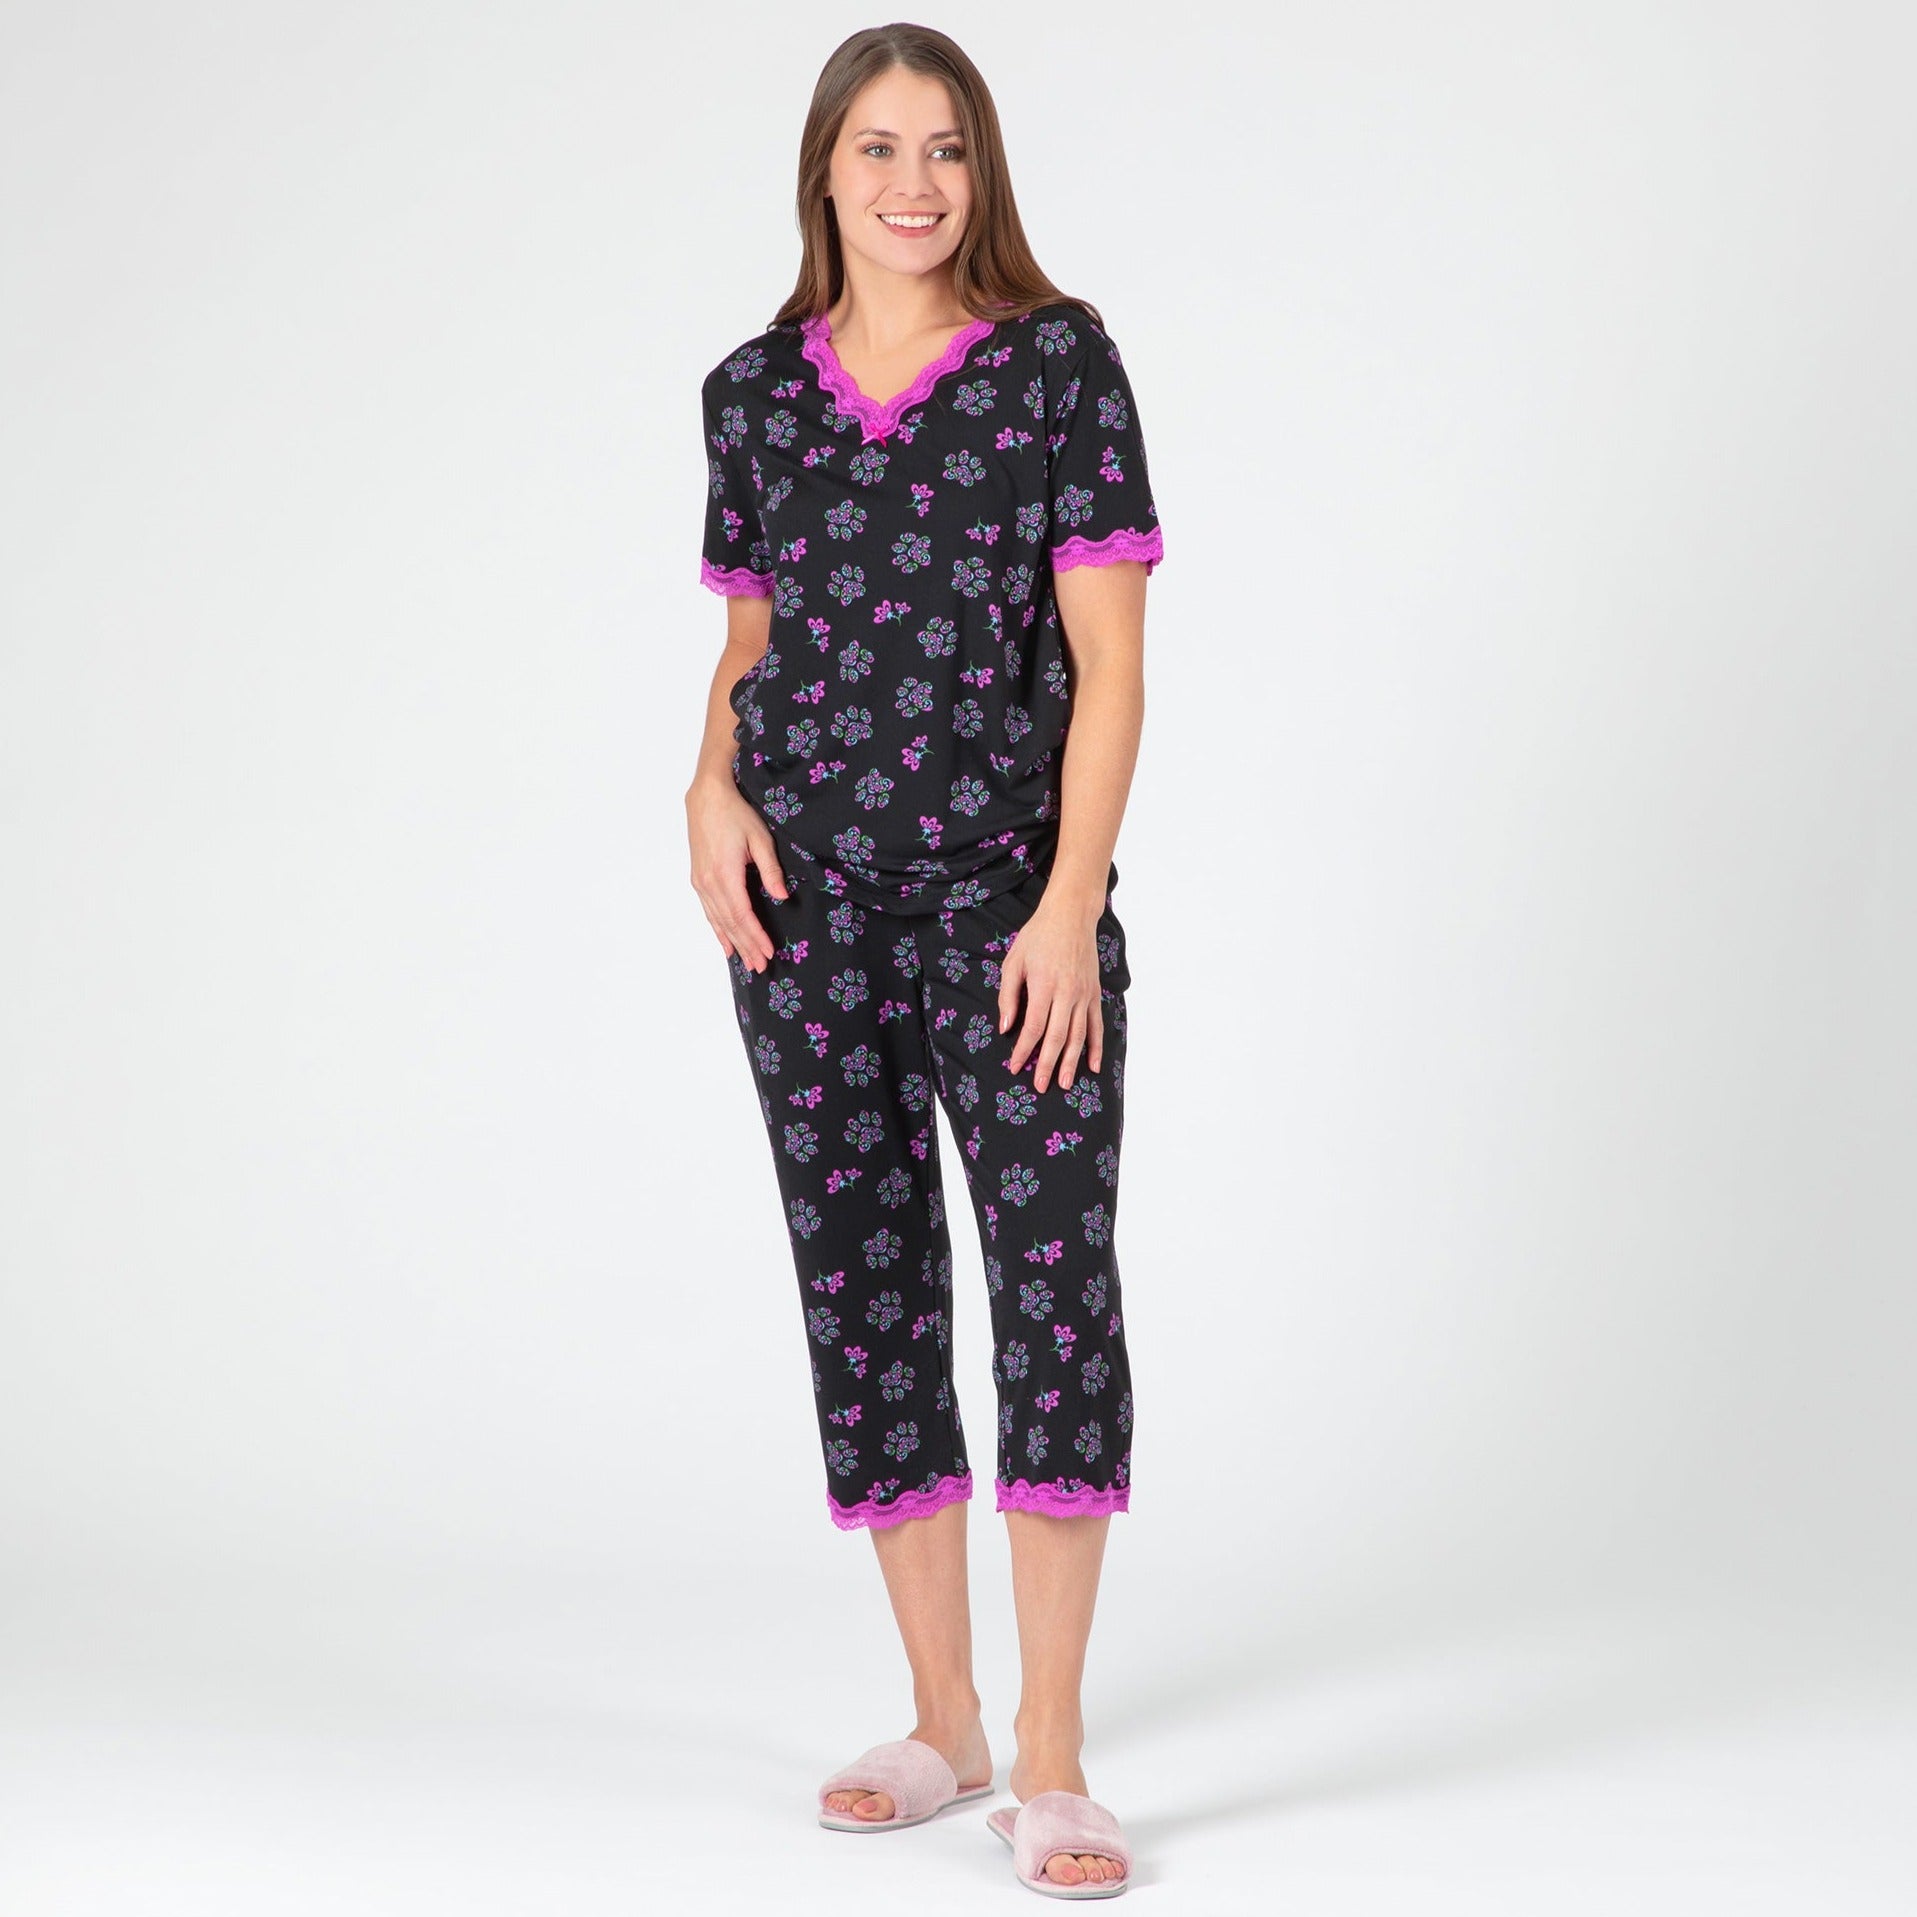 Flowers & Swirls Paw Prints Soft Touch Pajamas - V-Neck & Capri Set - M